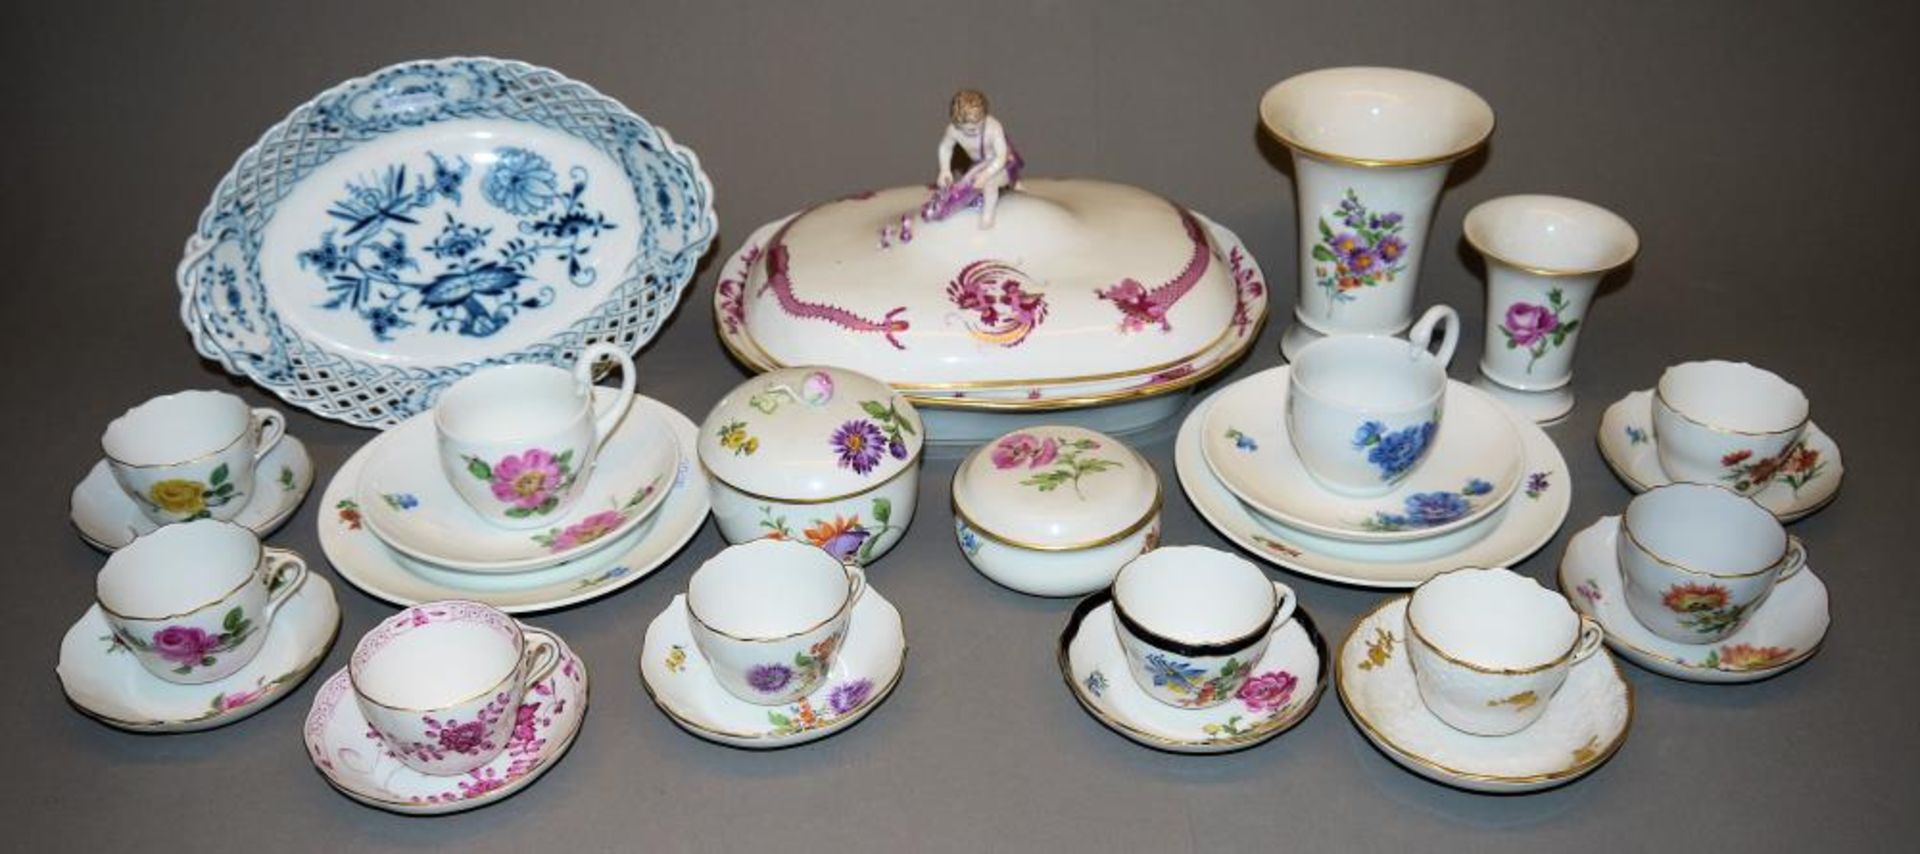 Sammlung Meißner-Porzellan ab 1850: 2 Kaffeetassen u. Teller, 8 Mokkatassen, 2 Vasen, Terrine,